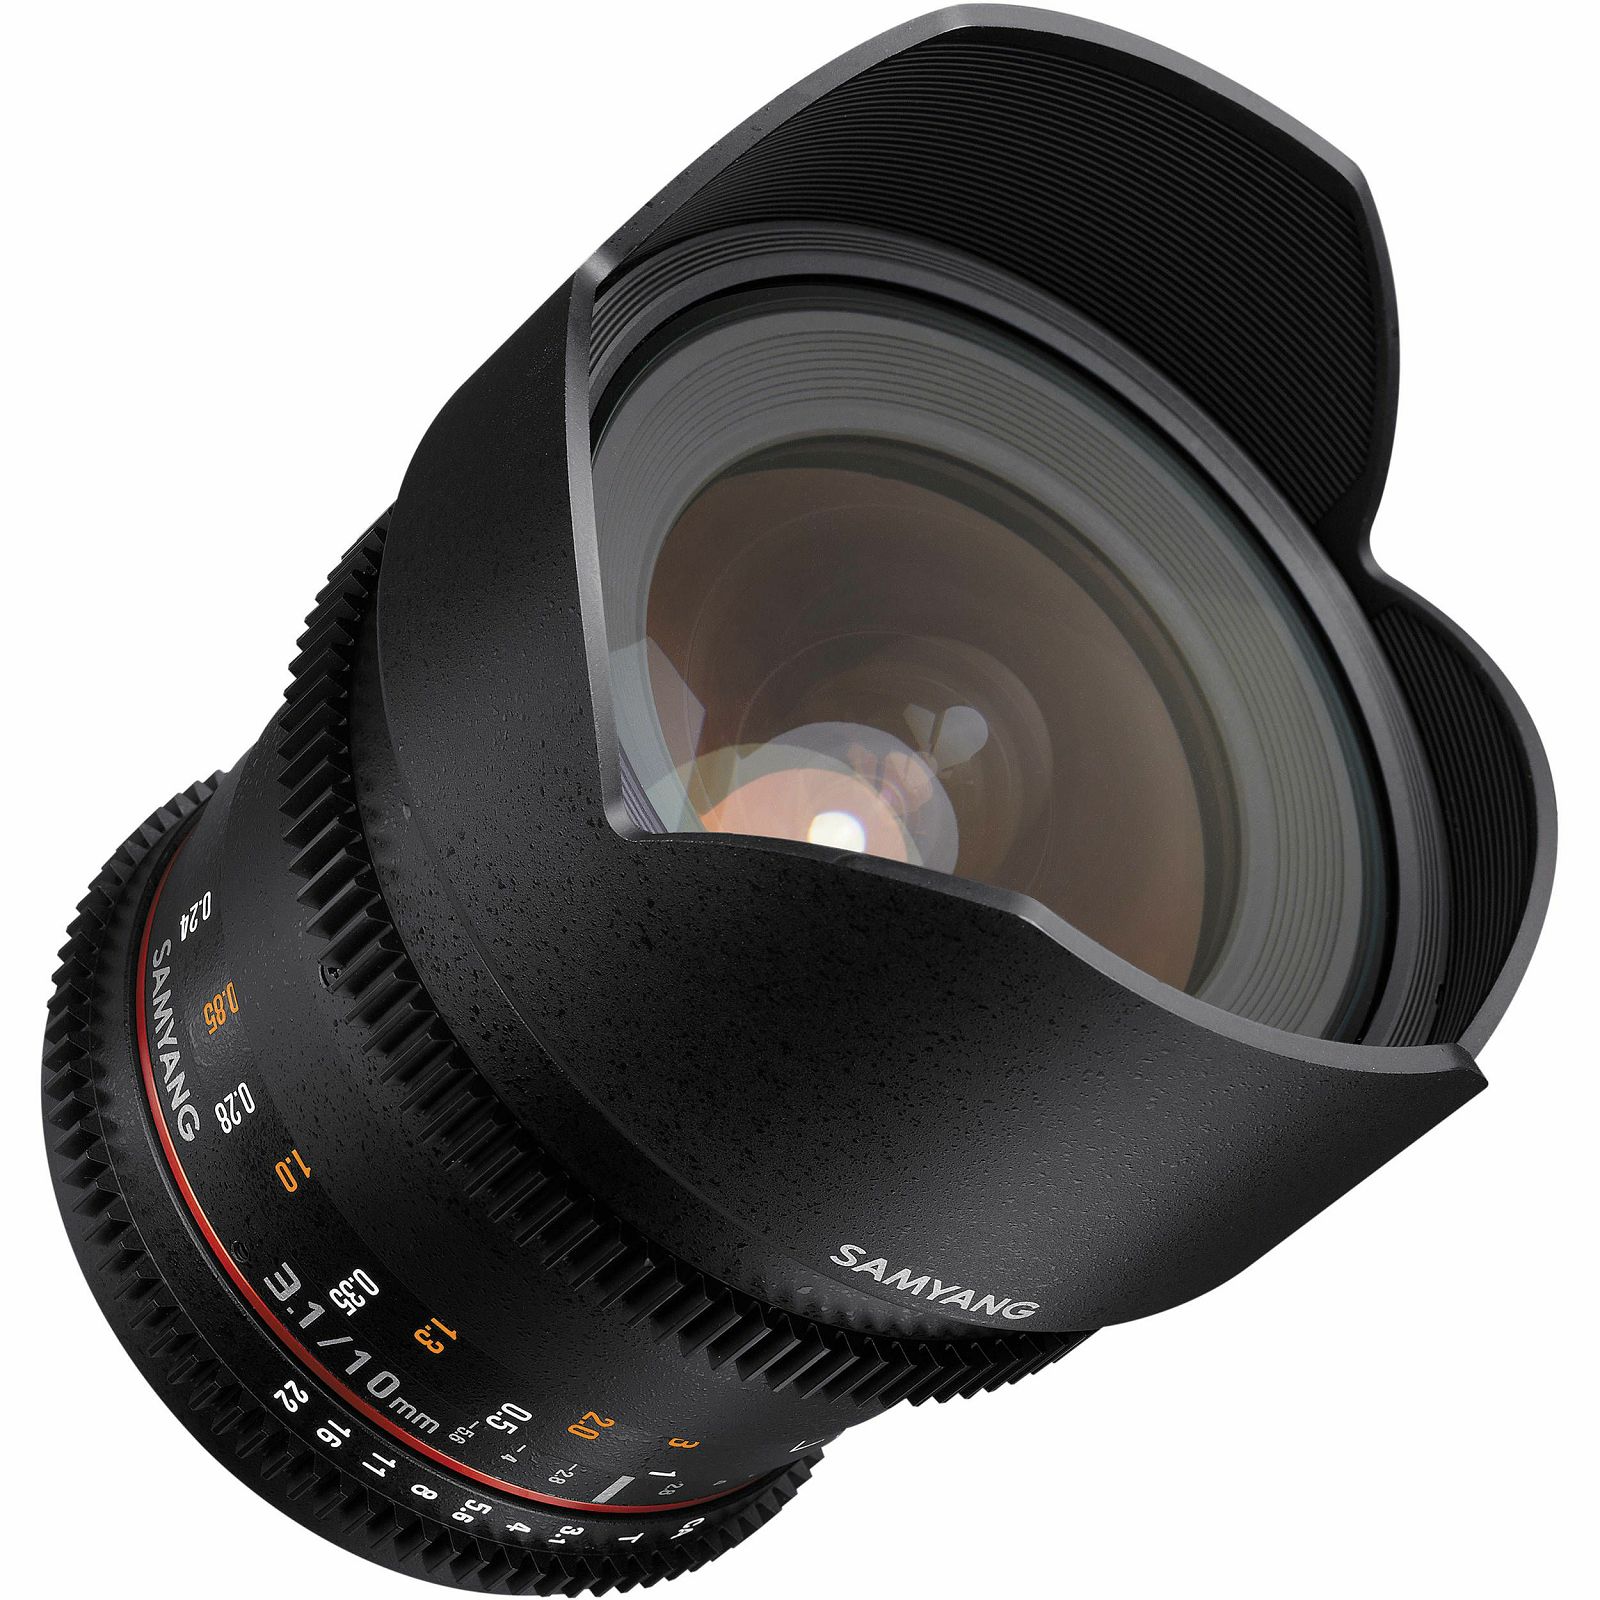 Samyang 10mm T3.1 VDSLR ED AS NCS CS objektiv za Canon